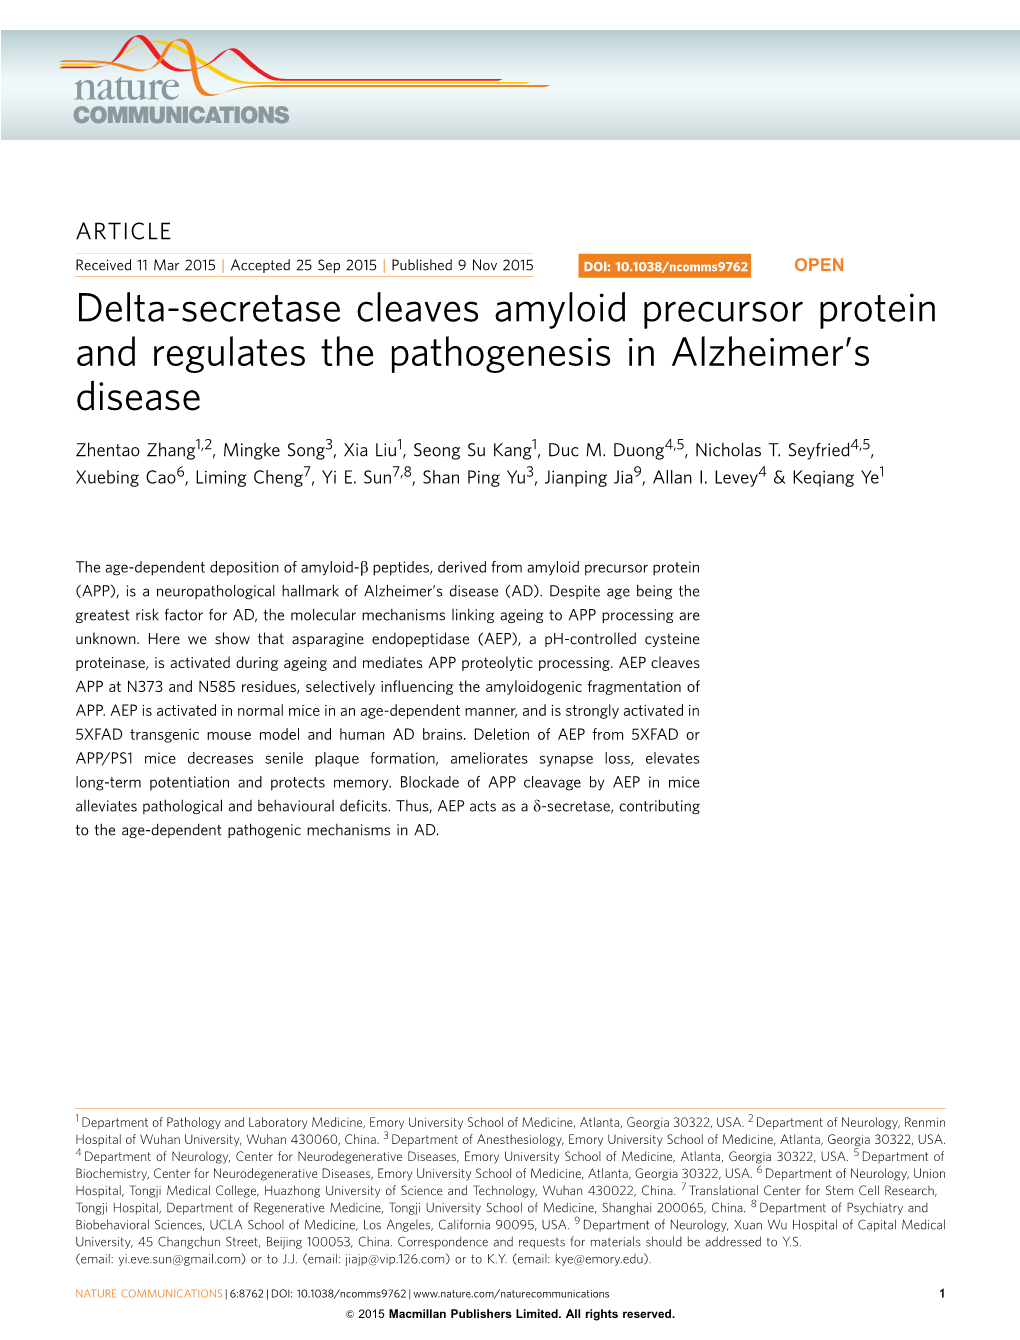 Delta-Secretase Cleaves Amyloid Precursor Protein and Regulates the Pathogenesis in Alzheimer’S Disease